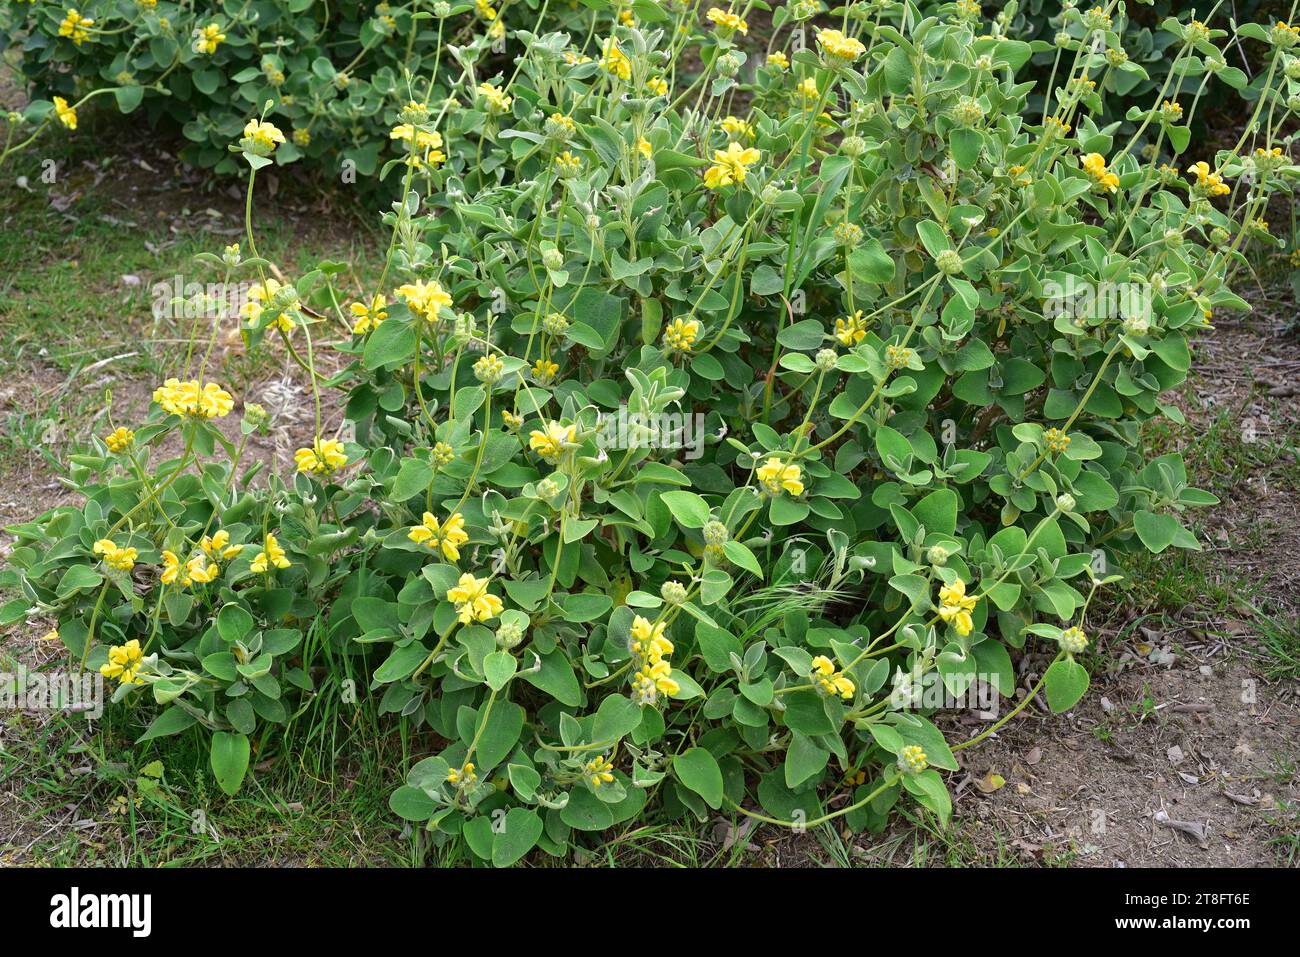 Golden-leaved Jerusalem sage (Phlomis chrysophylla) is an evergreen shrub native to southwest Asia. Flowering plant. Stock Photo